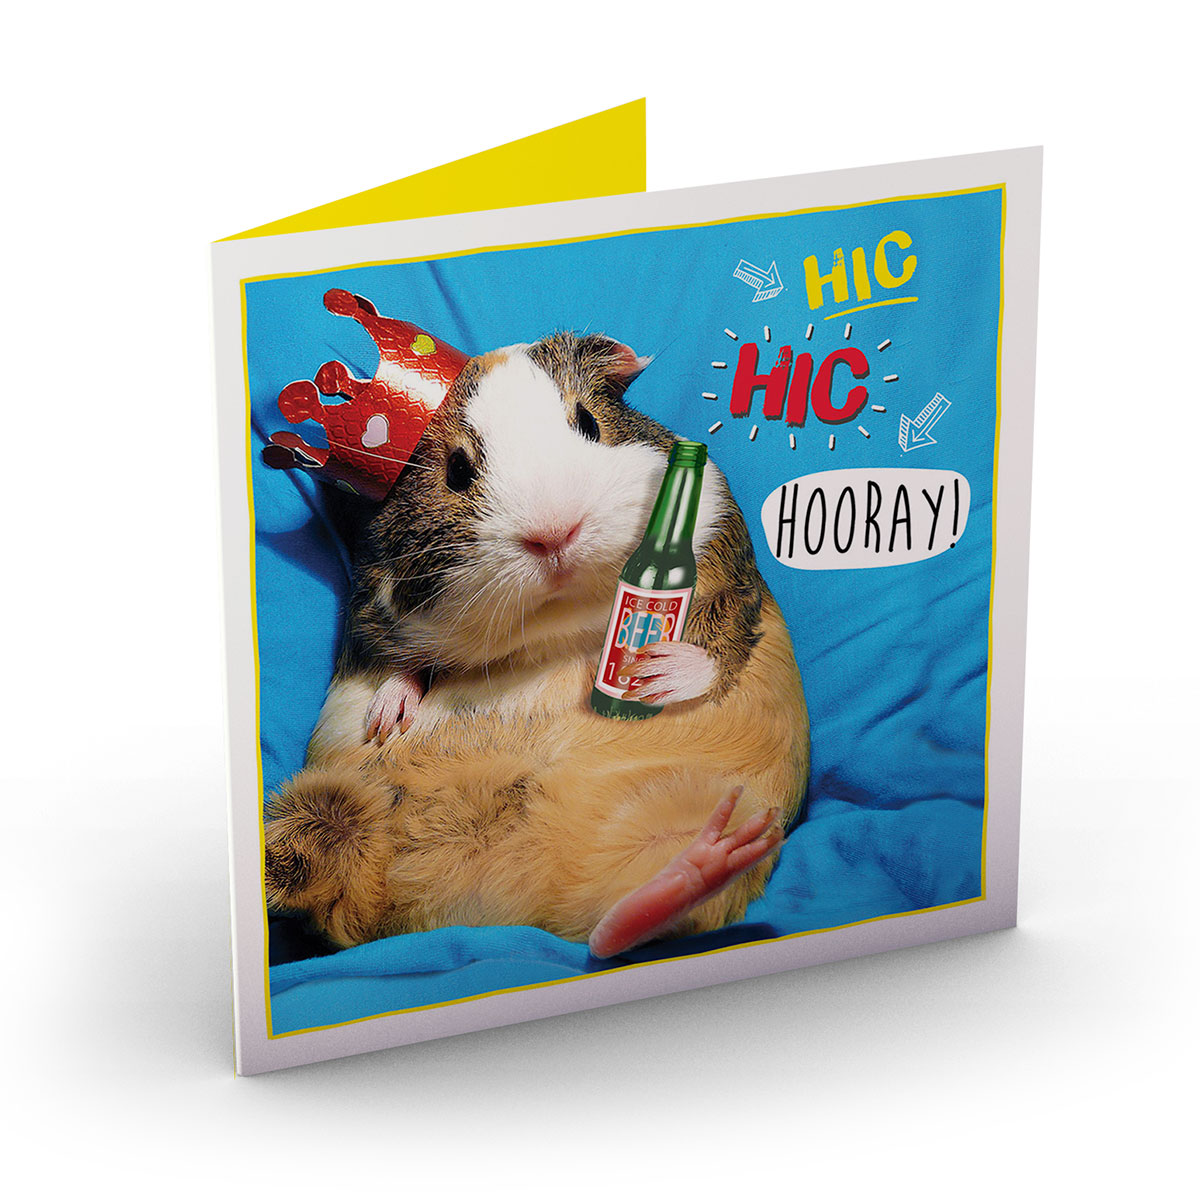 Personalised Card - Guinea Pig, Hic Hic Hooray